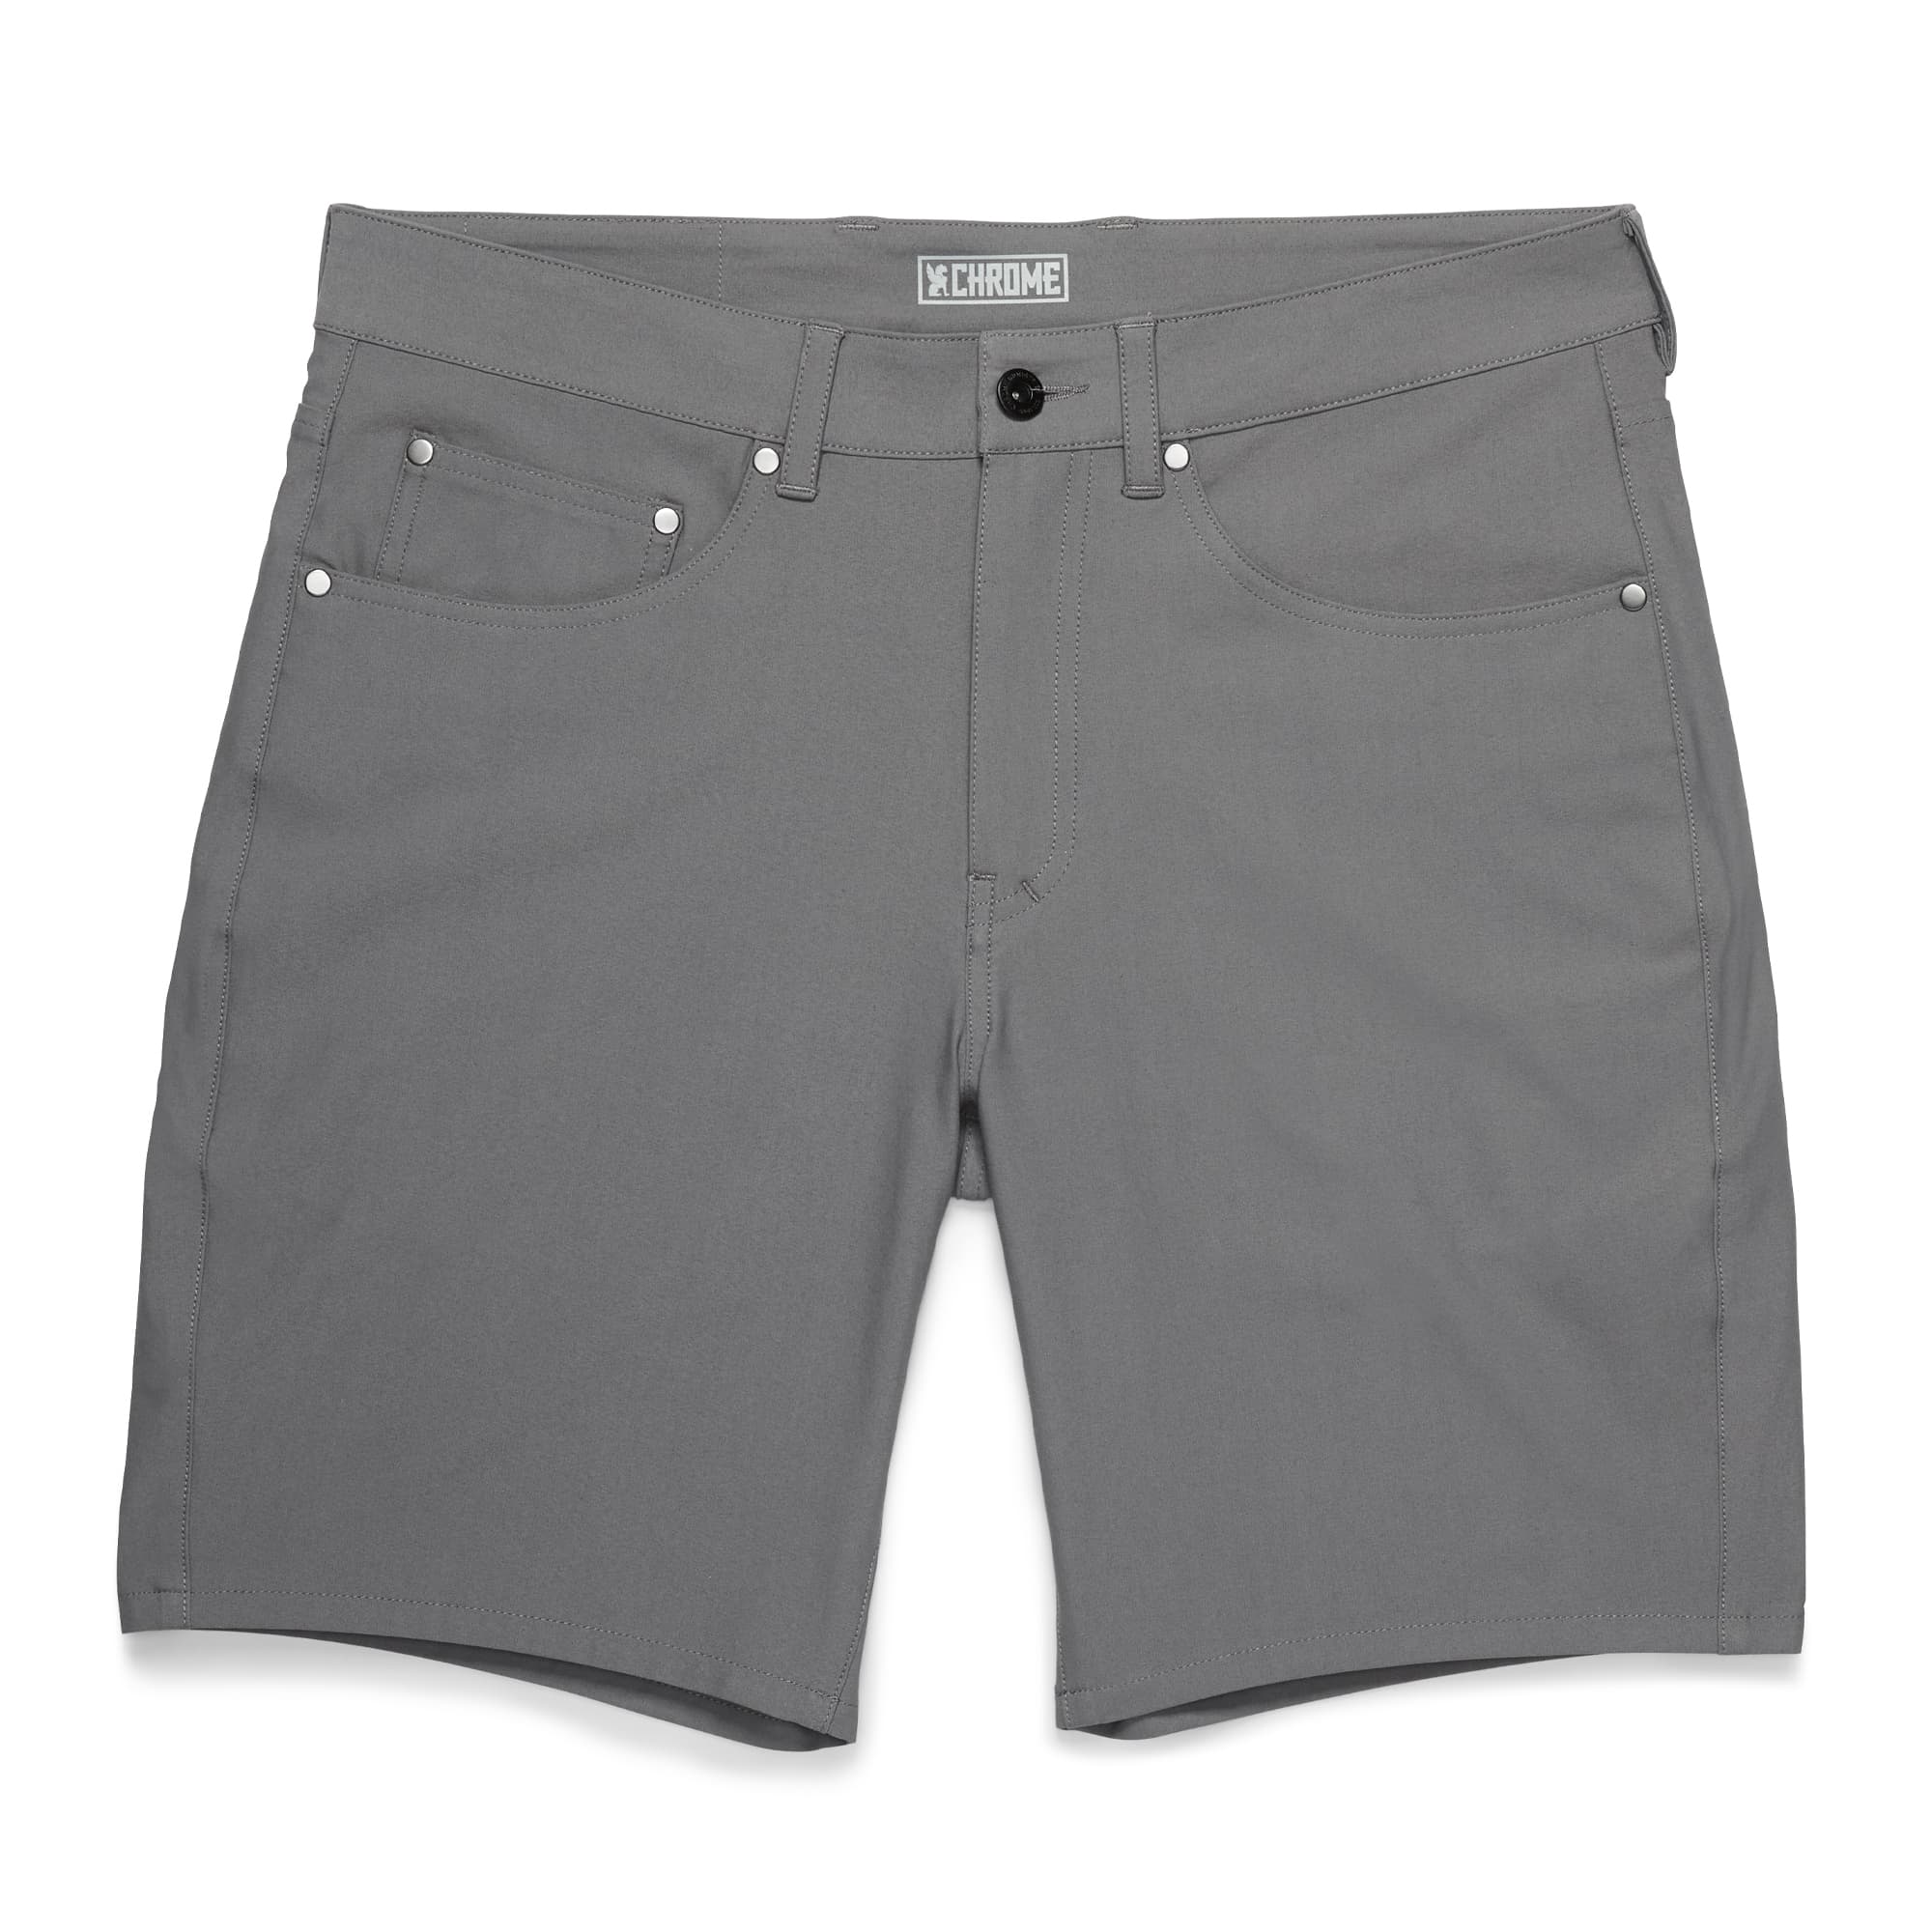 Men's Madrona 5-pocket short in grey #color_castle rock